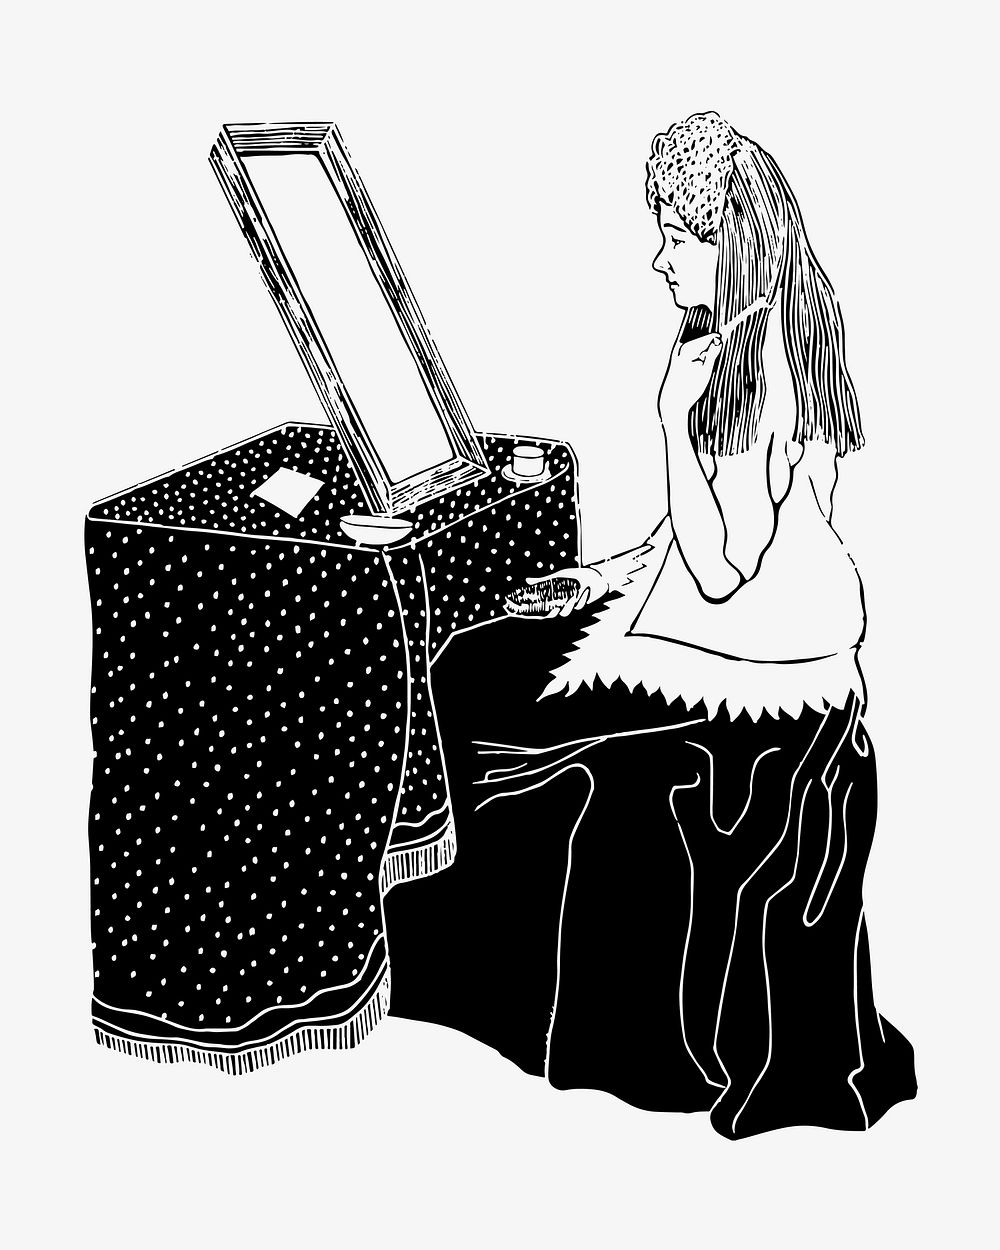 Vintage woman dressing up art print illustration vector, remix from artworks by Samuel Jessurun de Mesquita